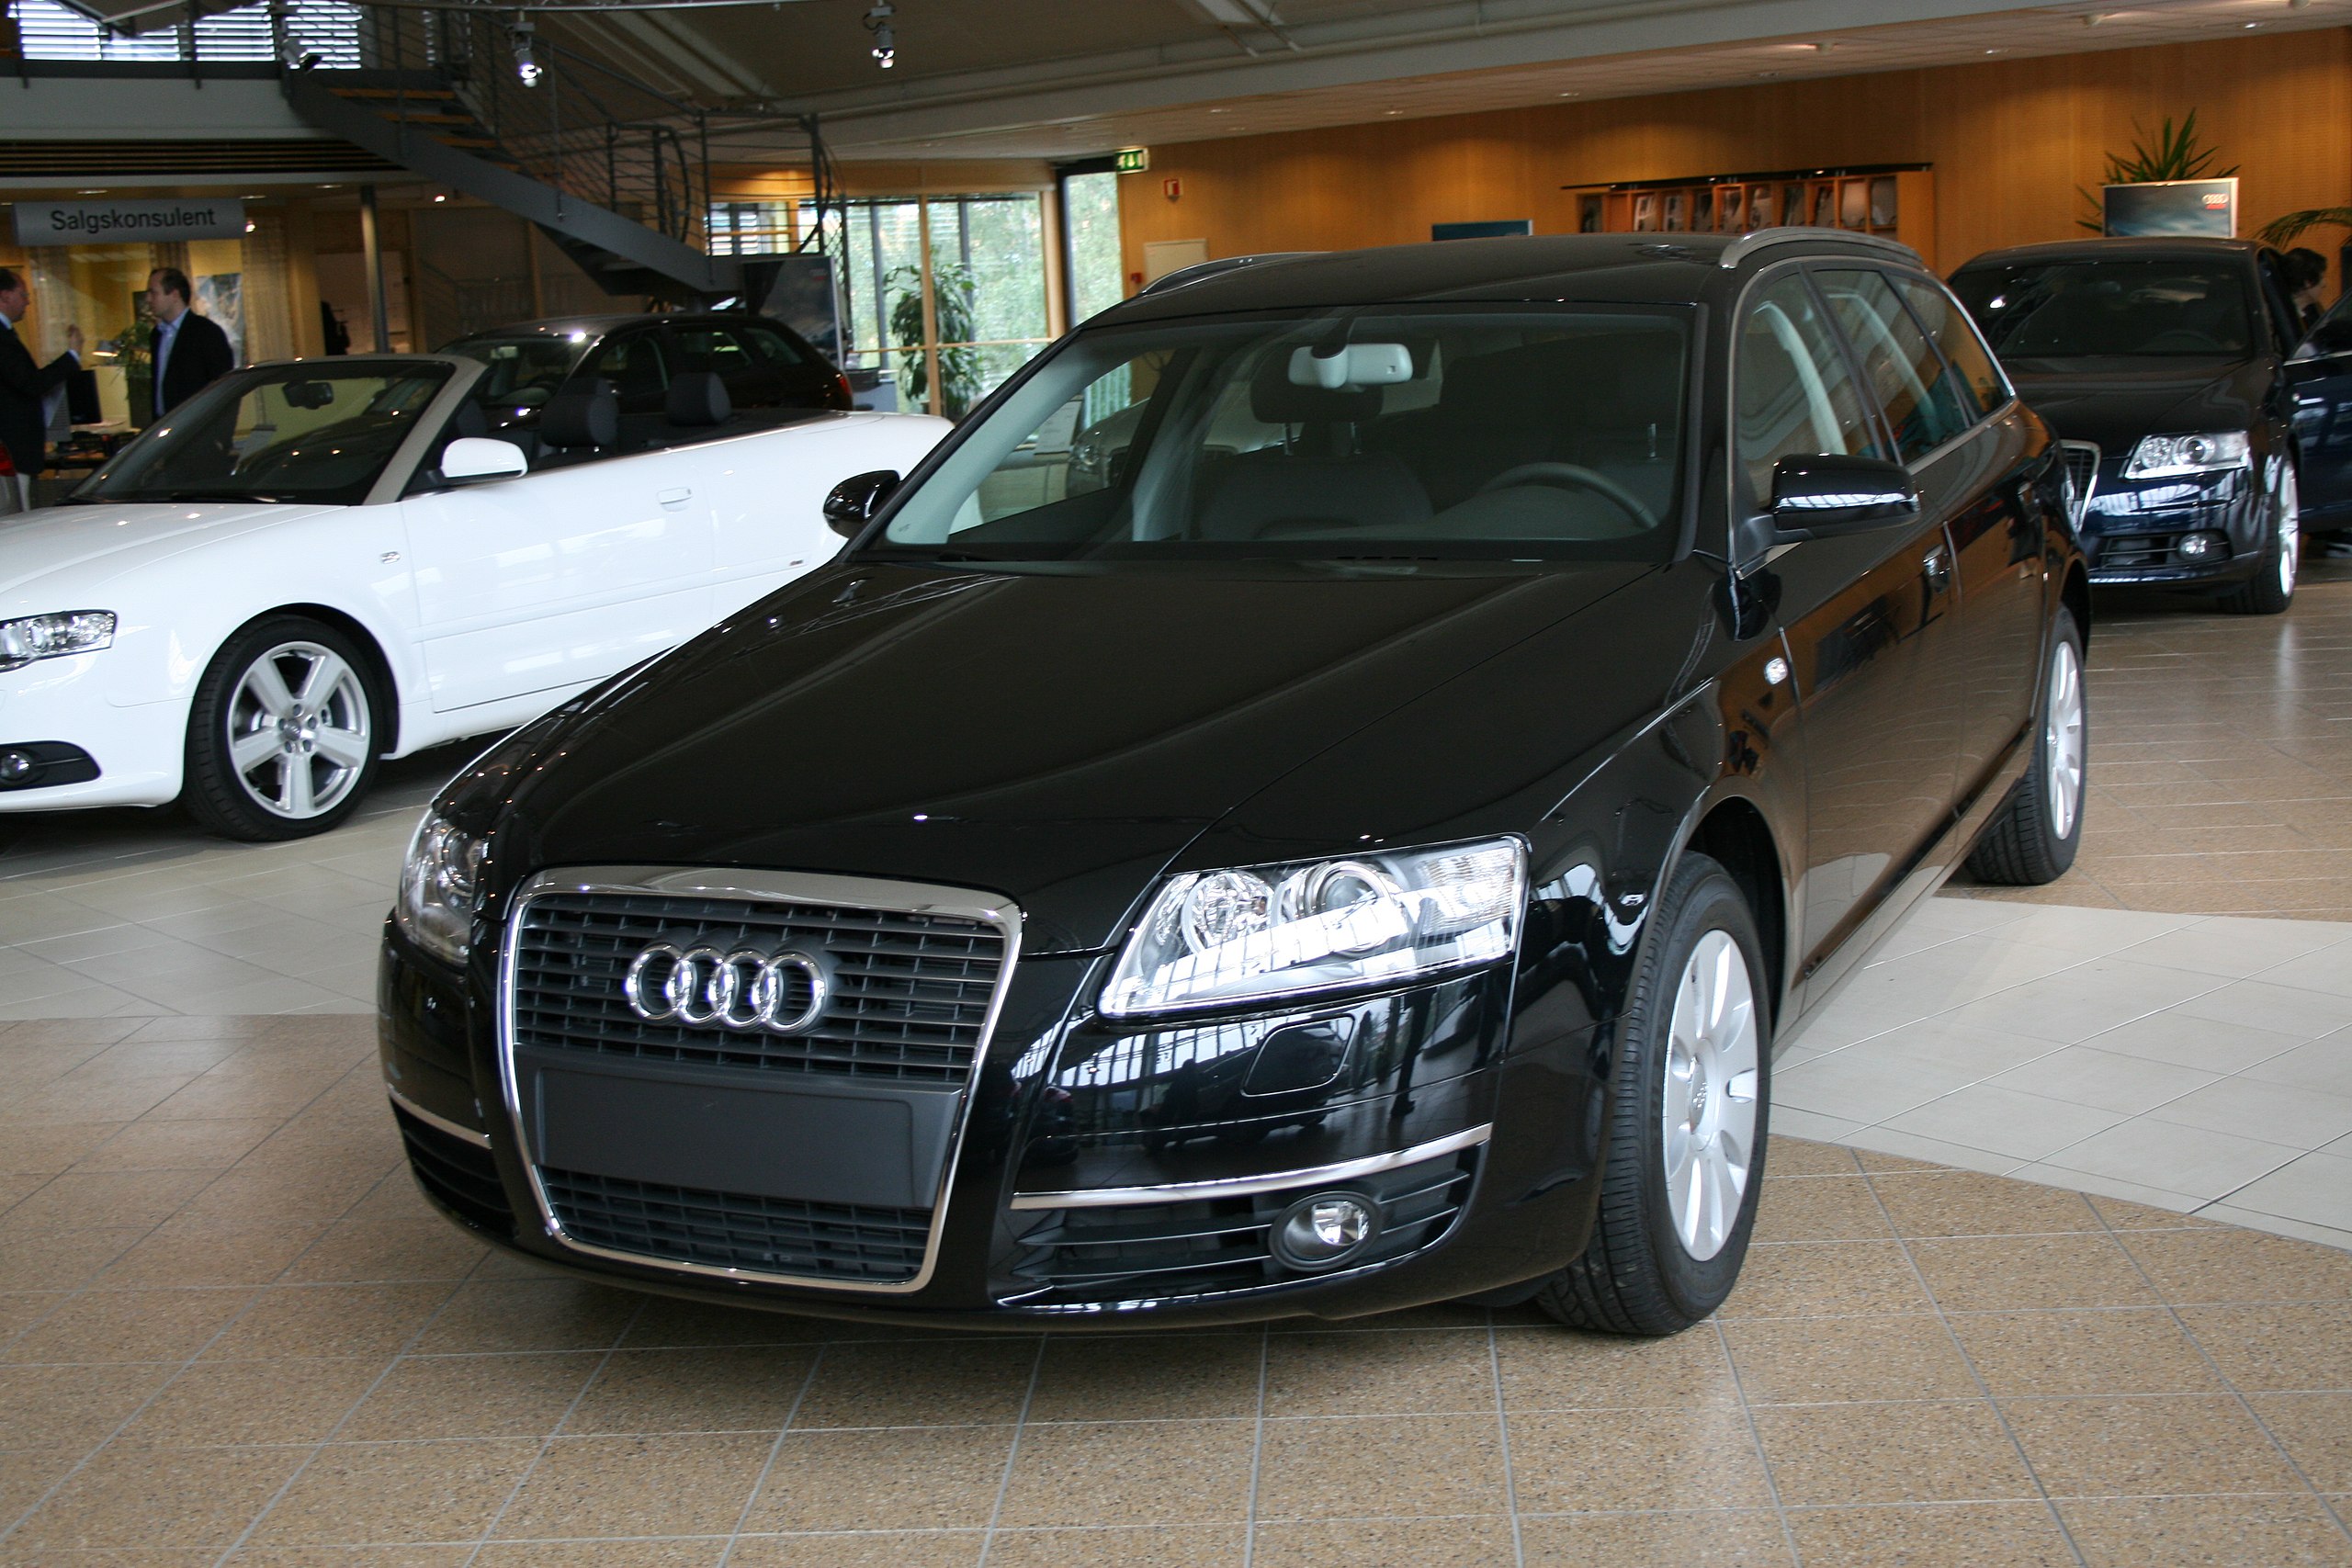 File:Audi A6 Avant.jpg - Wikimedia Commons